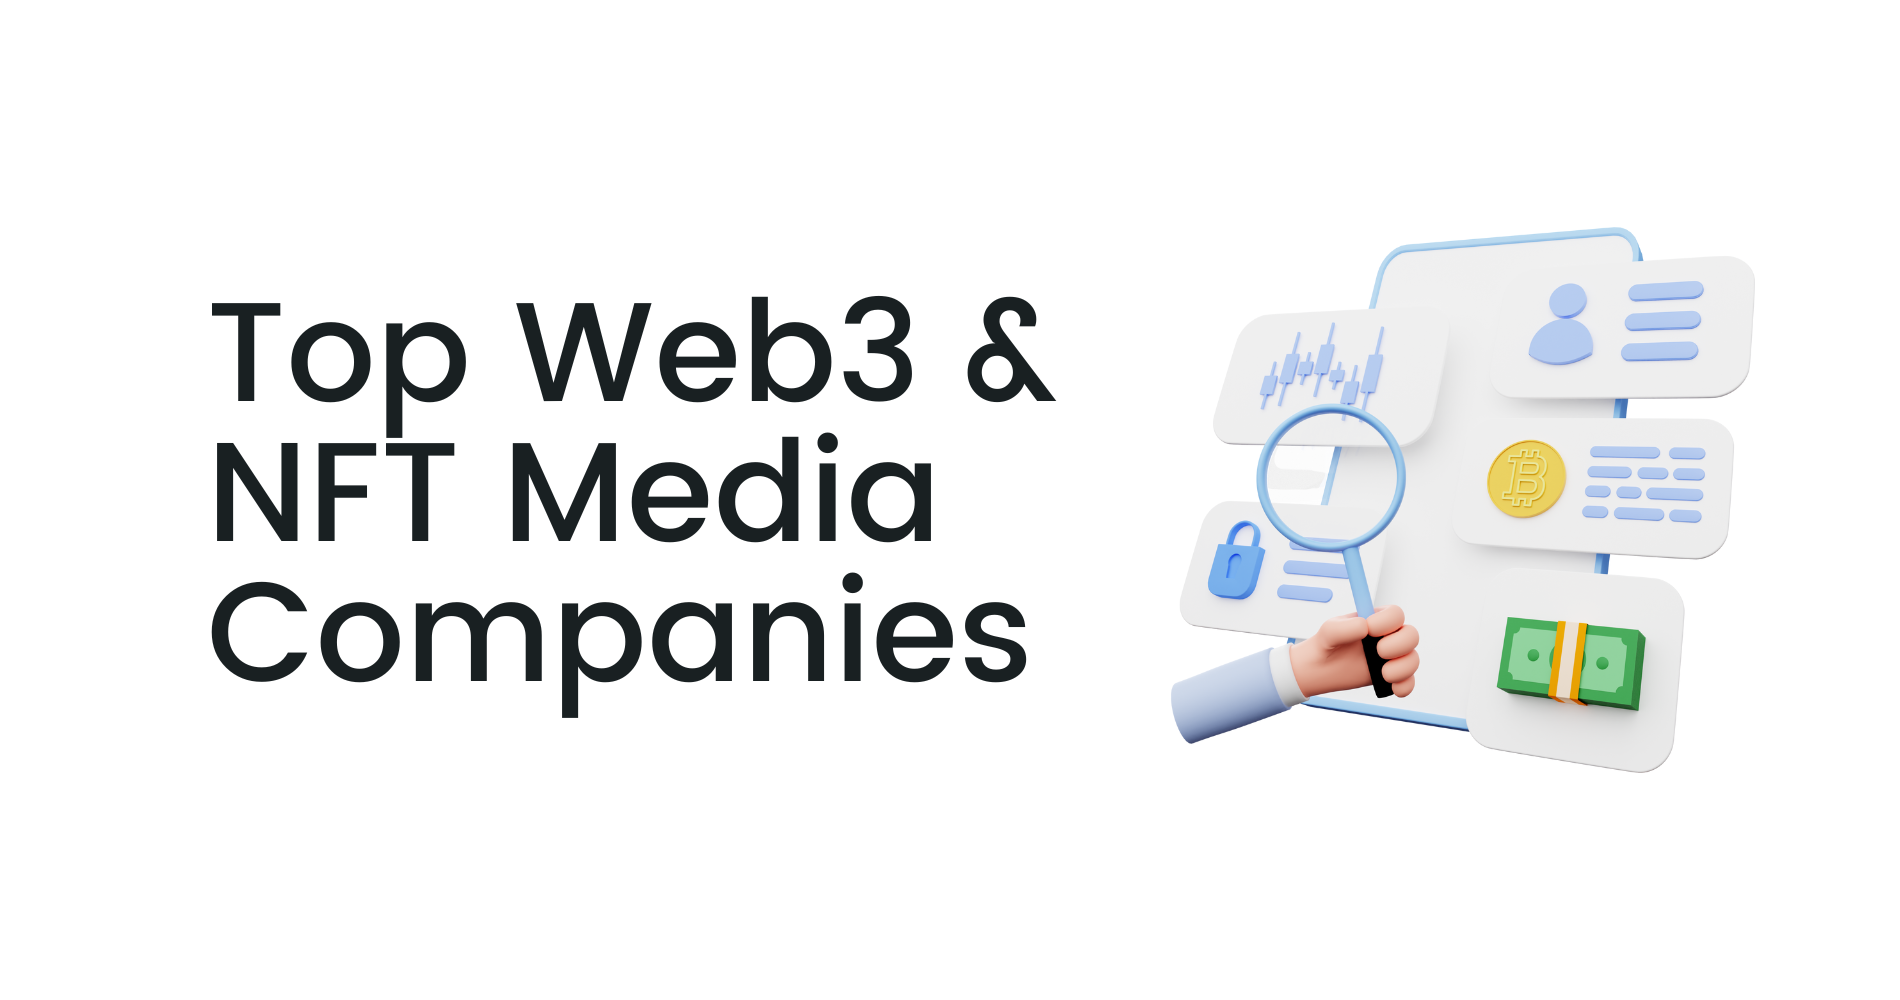 Top Web3 & NFT Media Companies